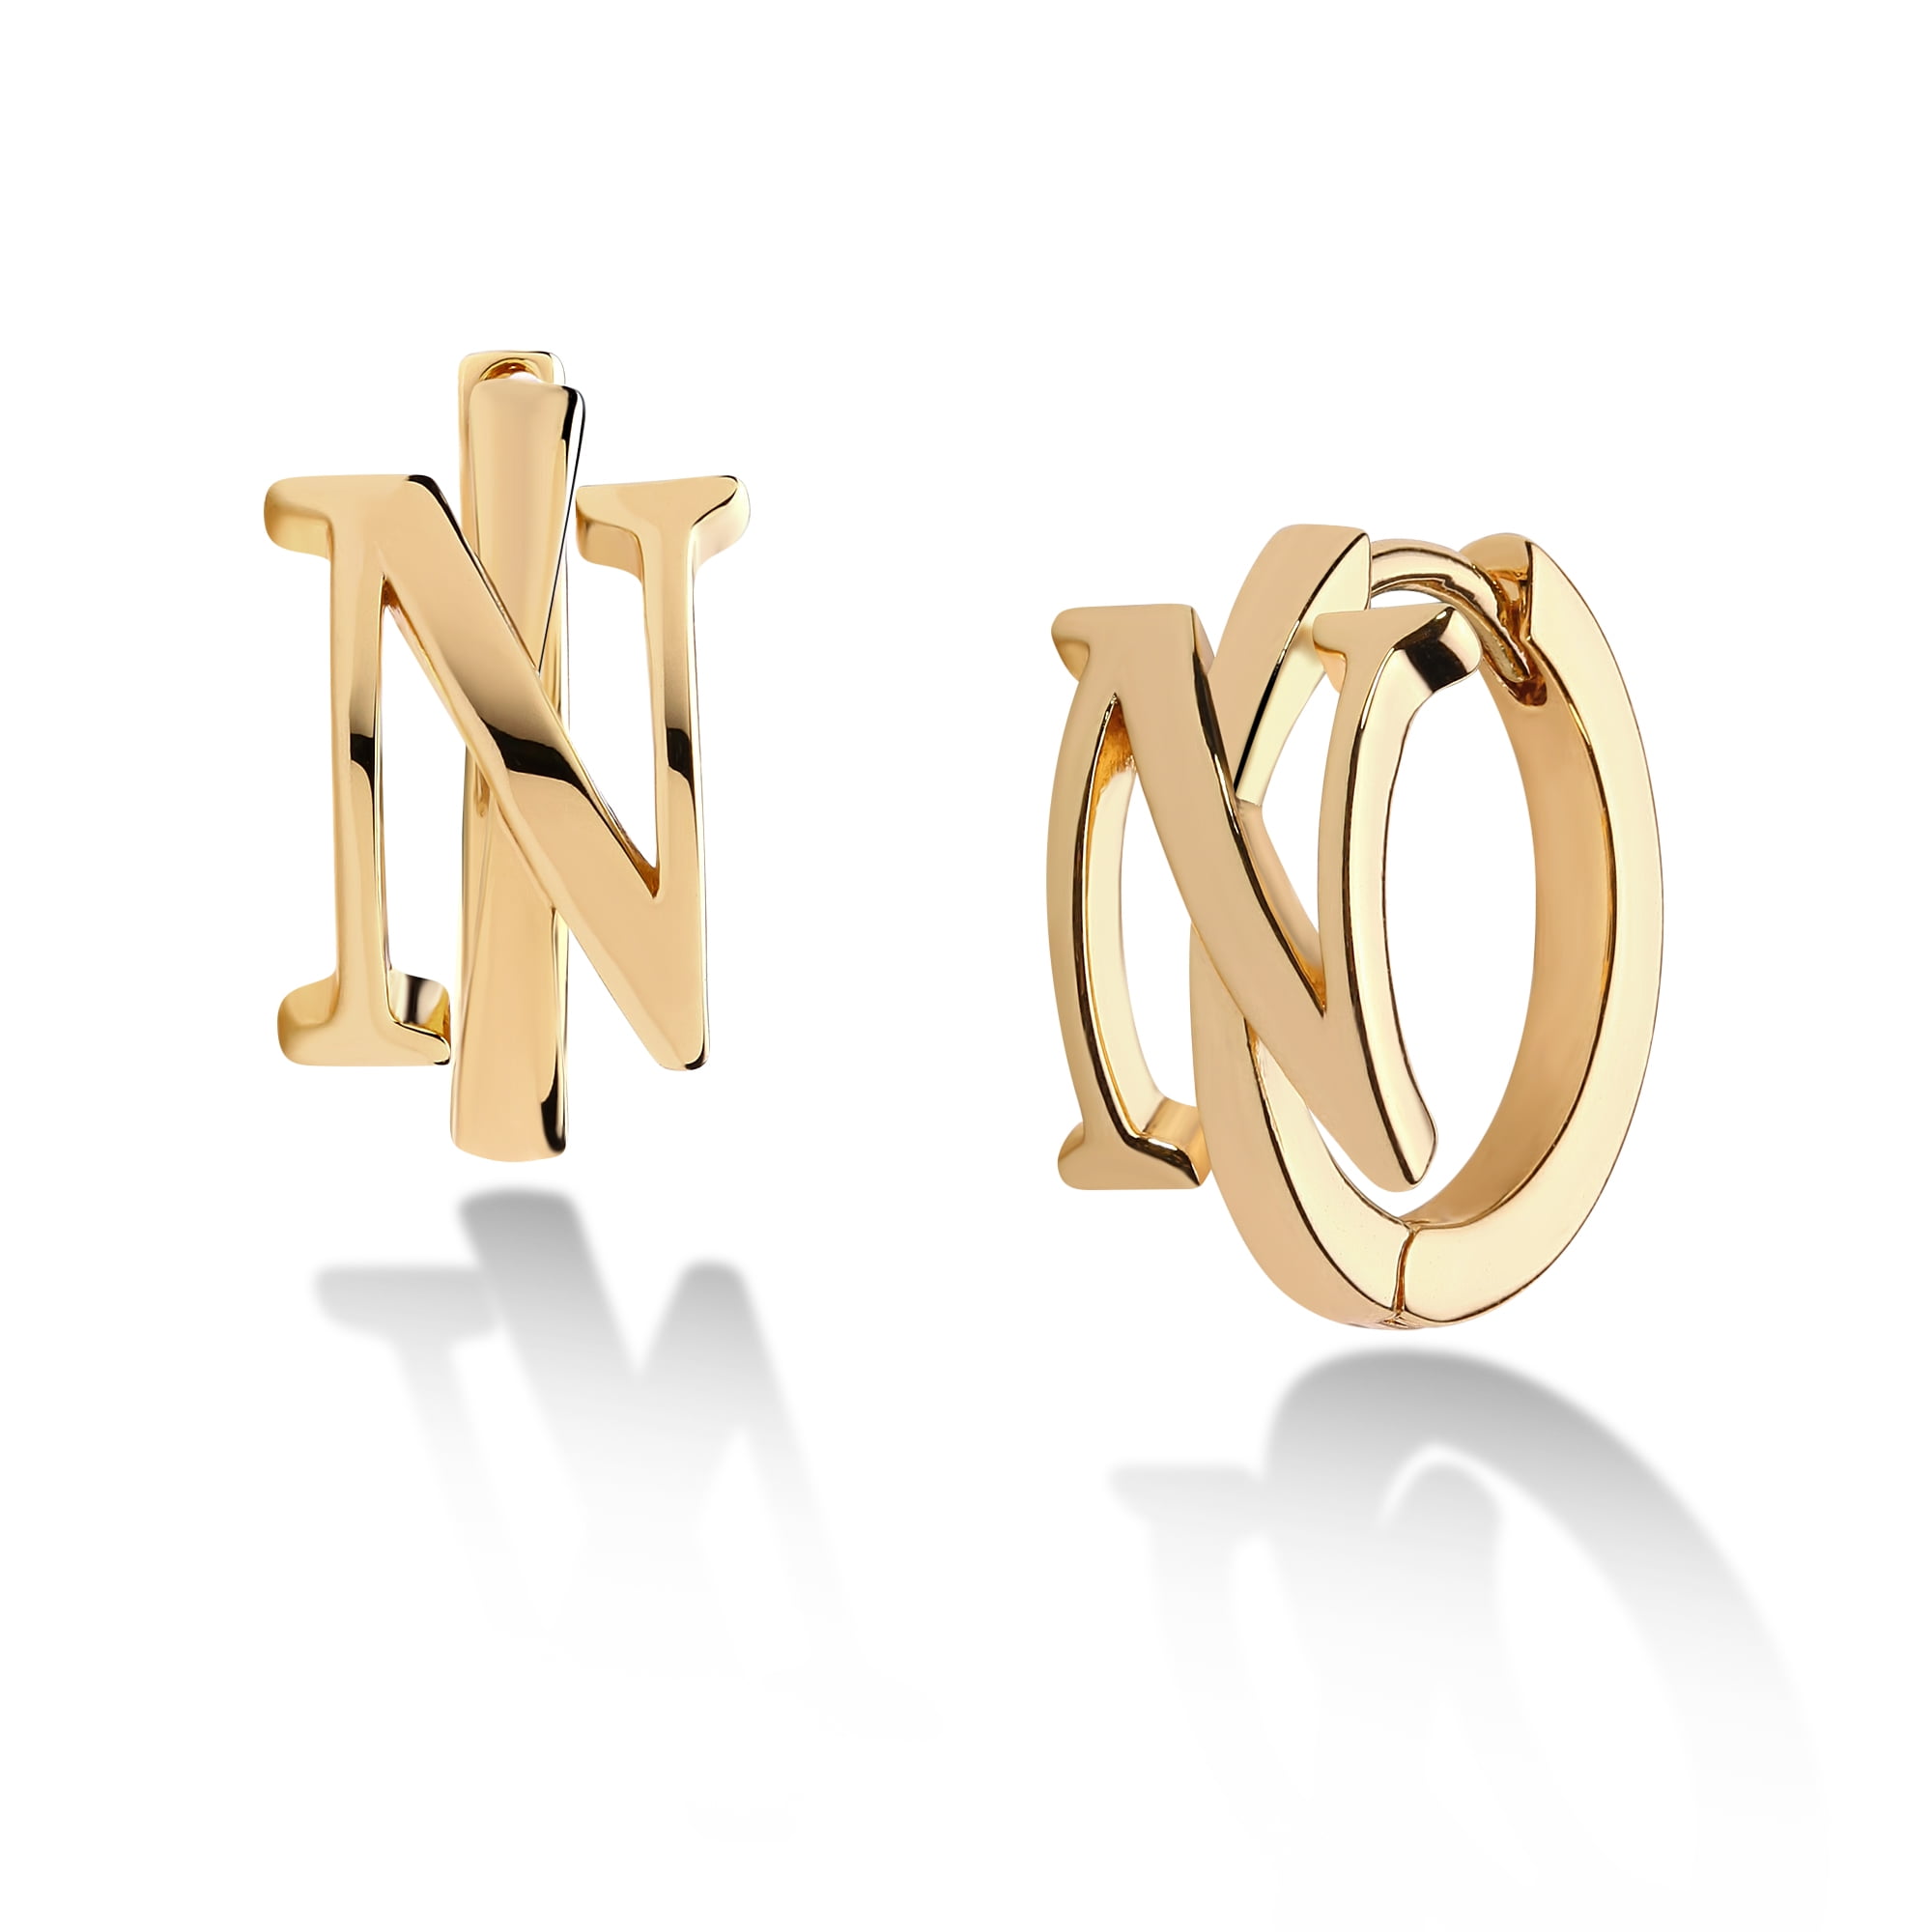 birthday gold earrings round nickel-free gift Earrings women's earrings stainless steel statement gift wedding